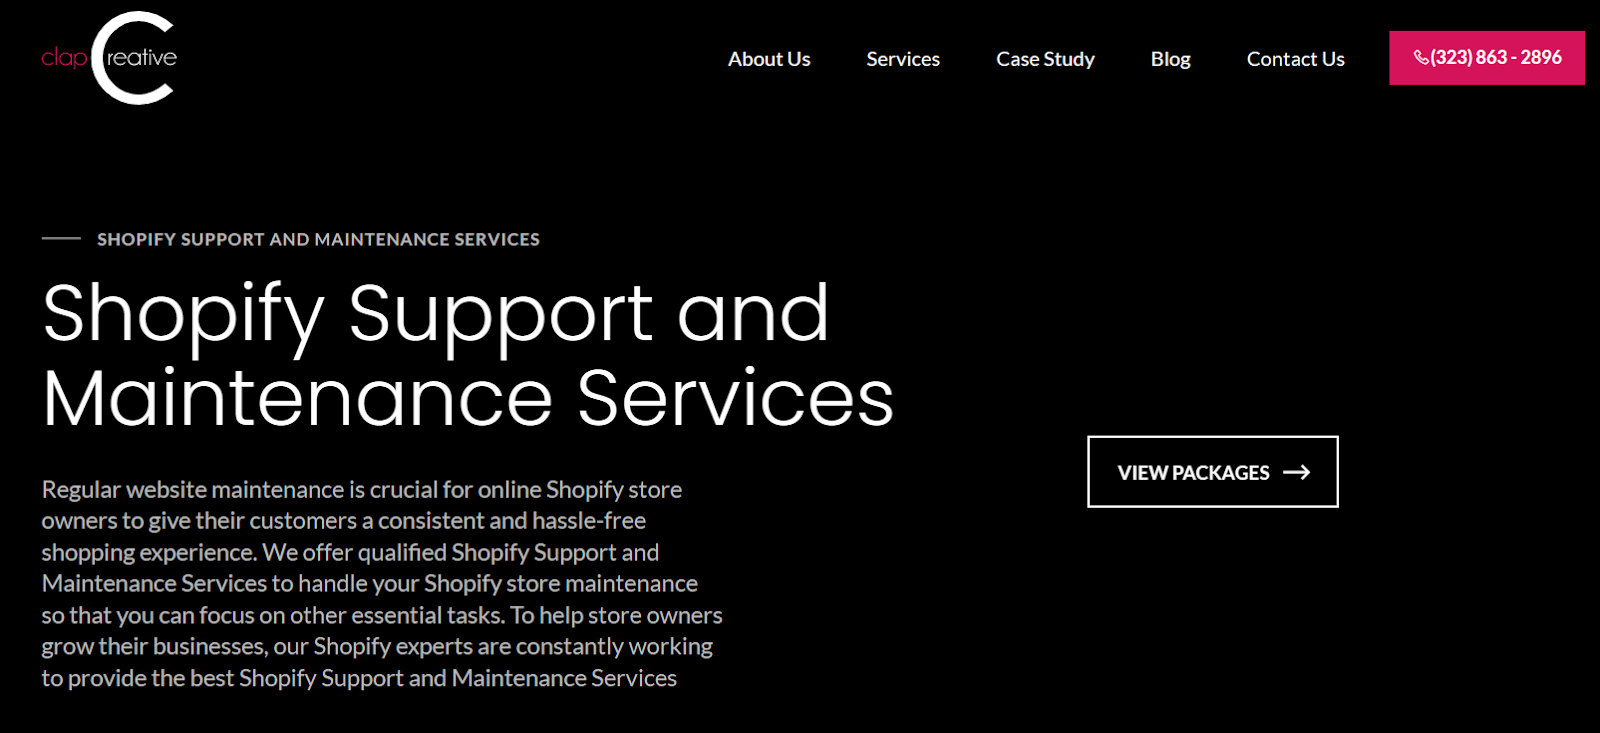 Best Shopify Maintenance Services